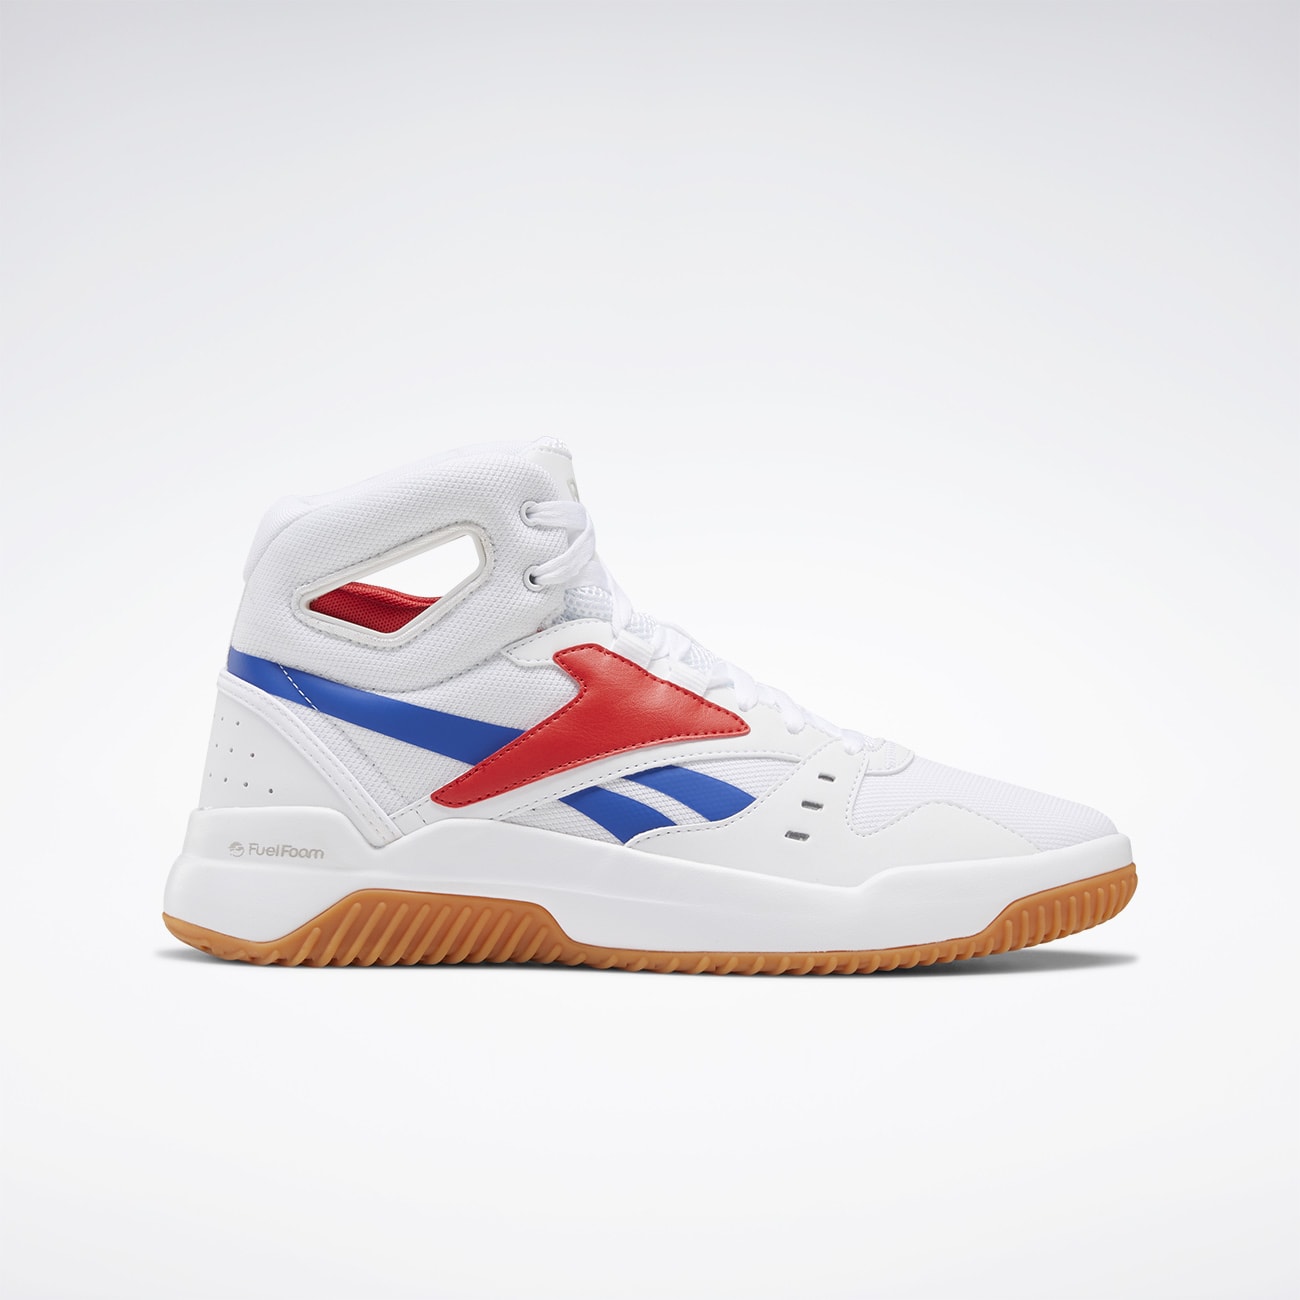 Reebok High Top Sneakers for Women for sale | eBay